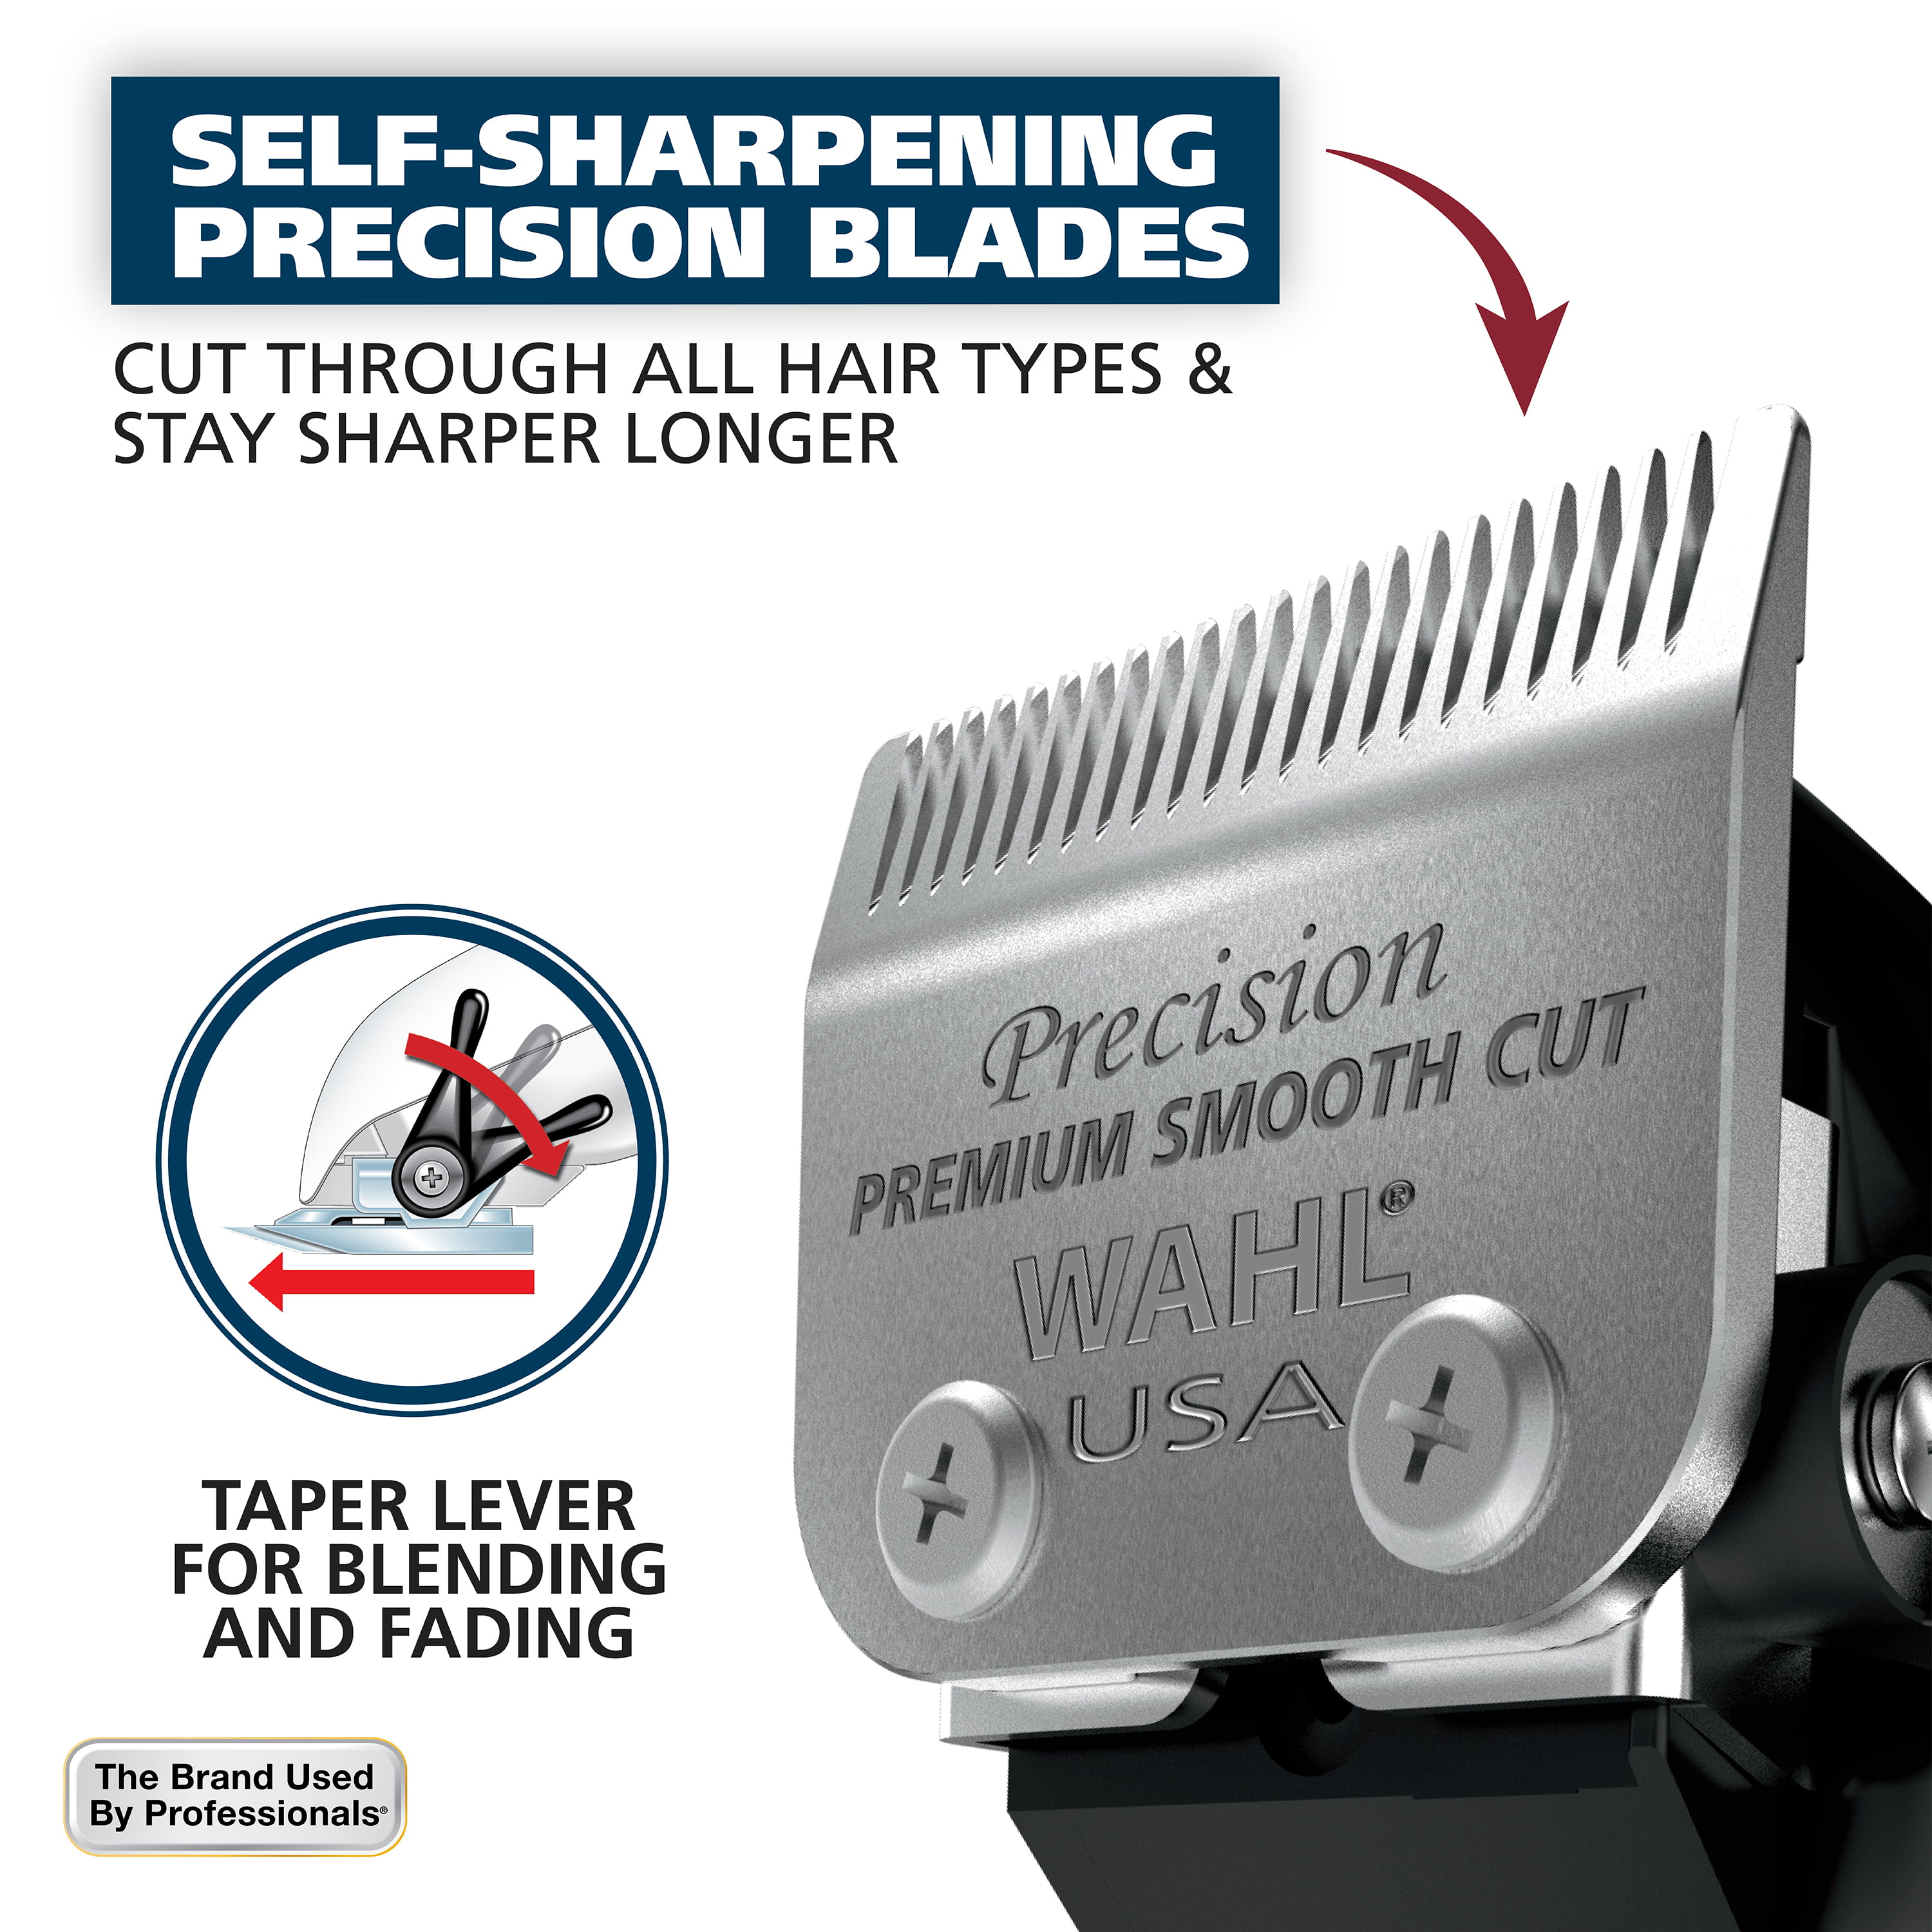 precision premium smooth cut wahl blade